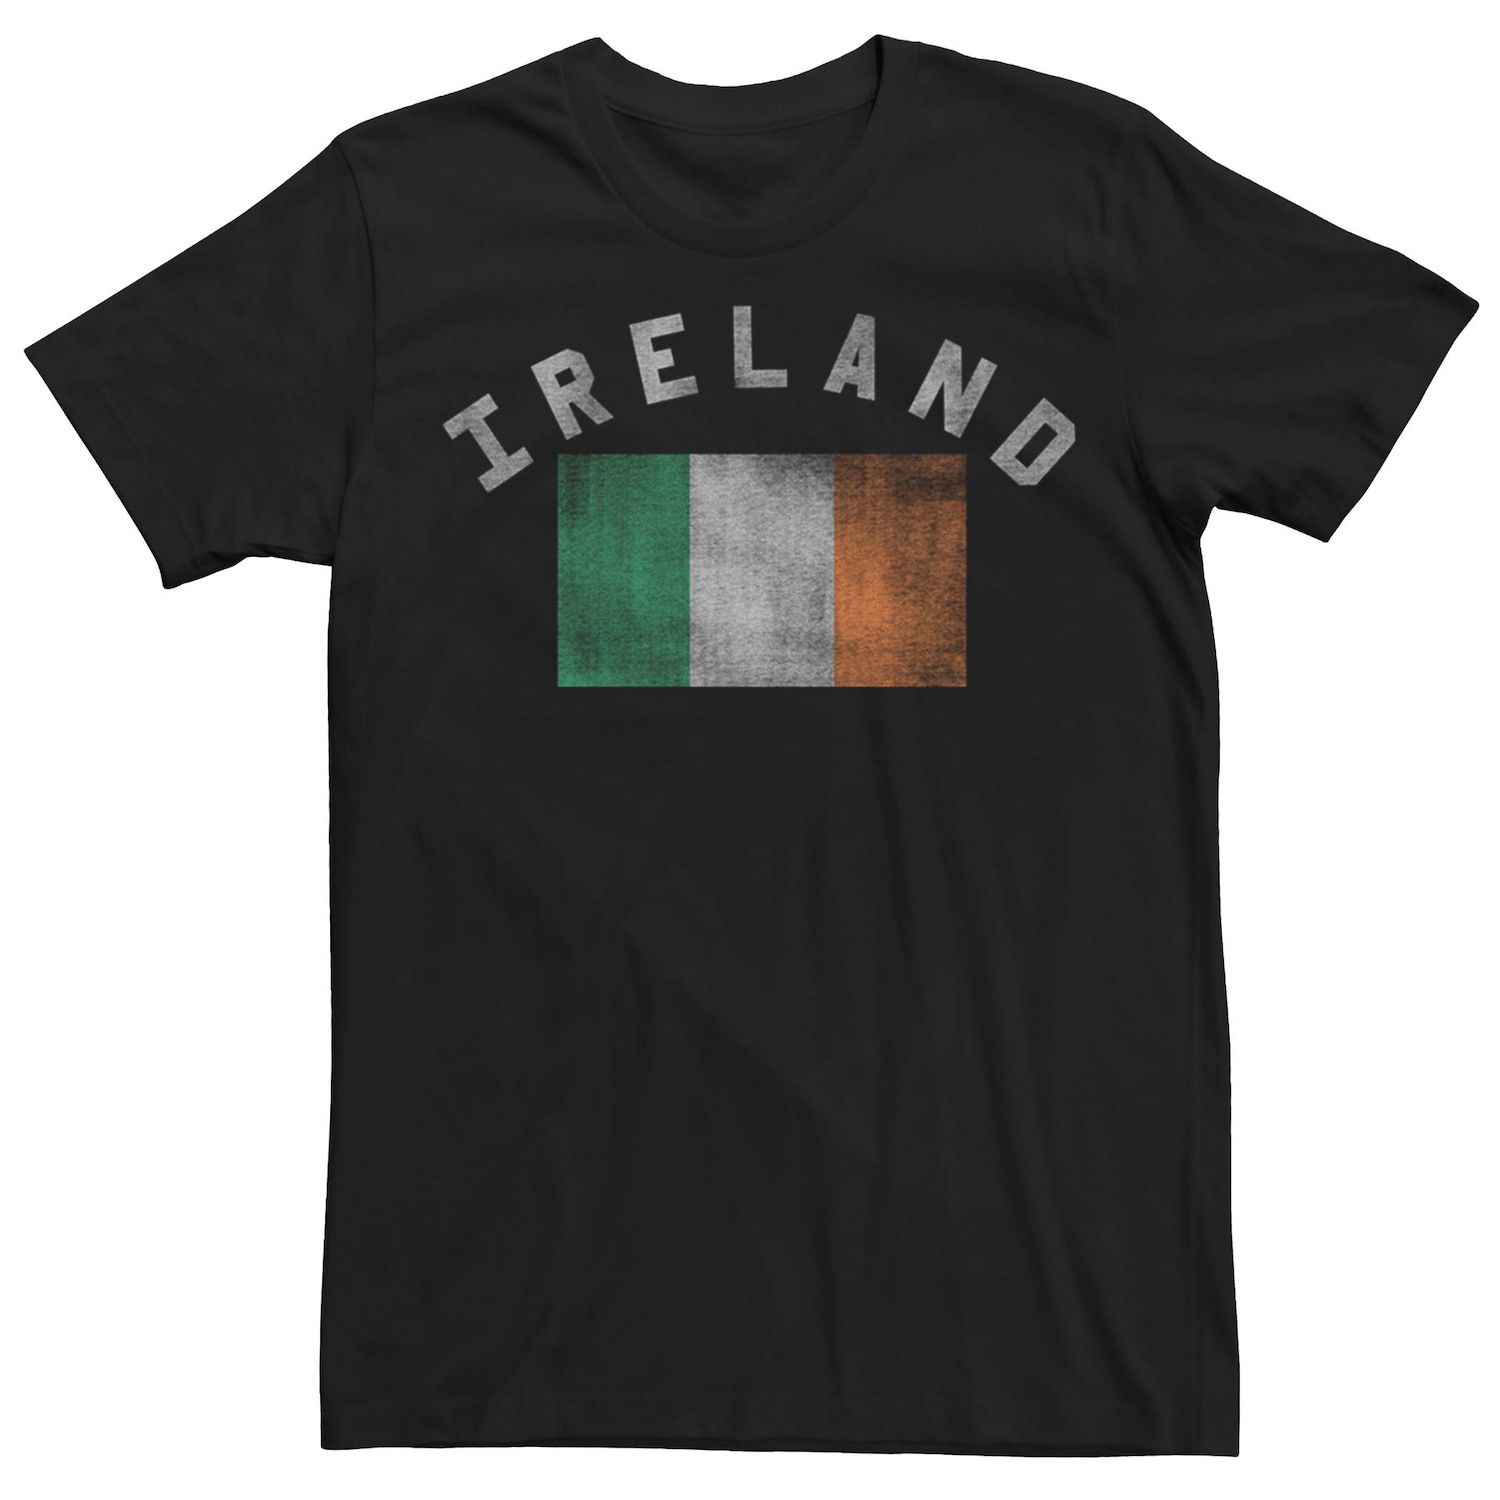 Мужская футболка с большим флагом Ирландии Licensed Character